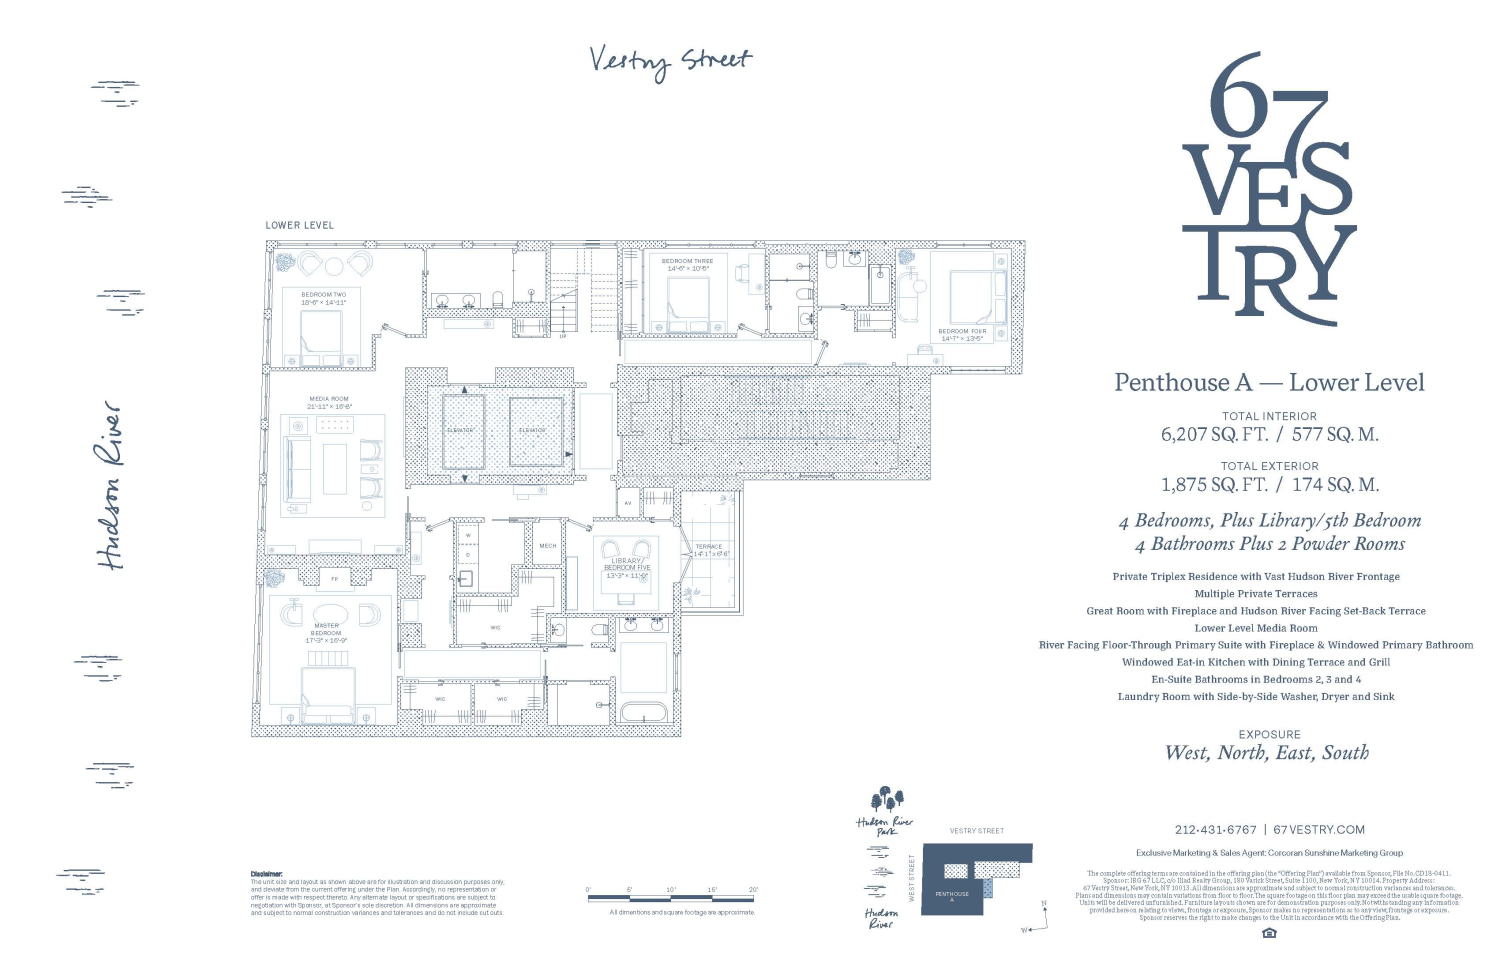 Floorplan for 67 Vestry Street, PH